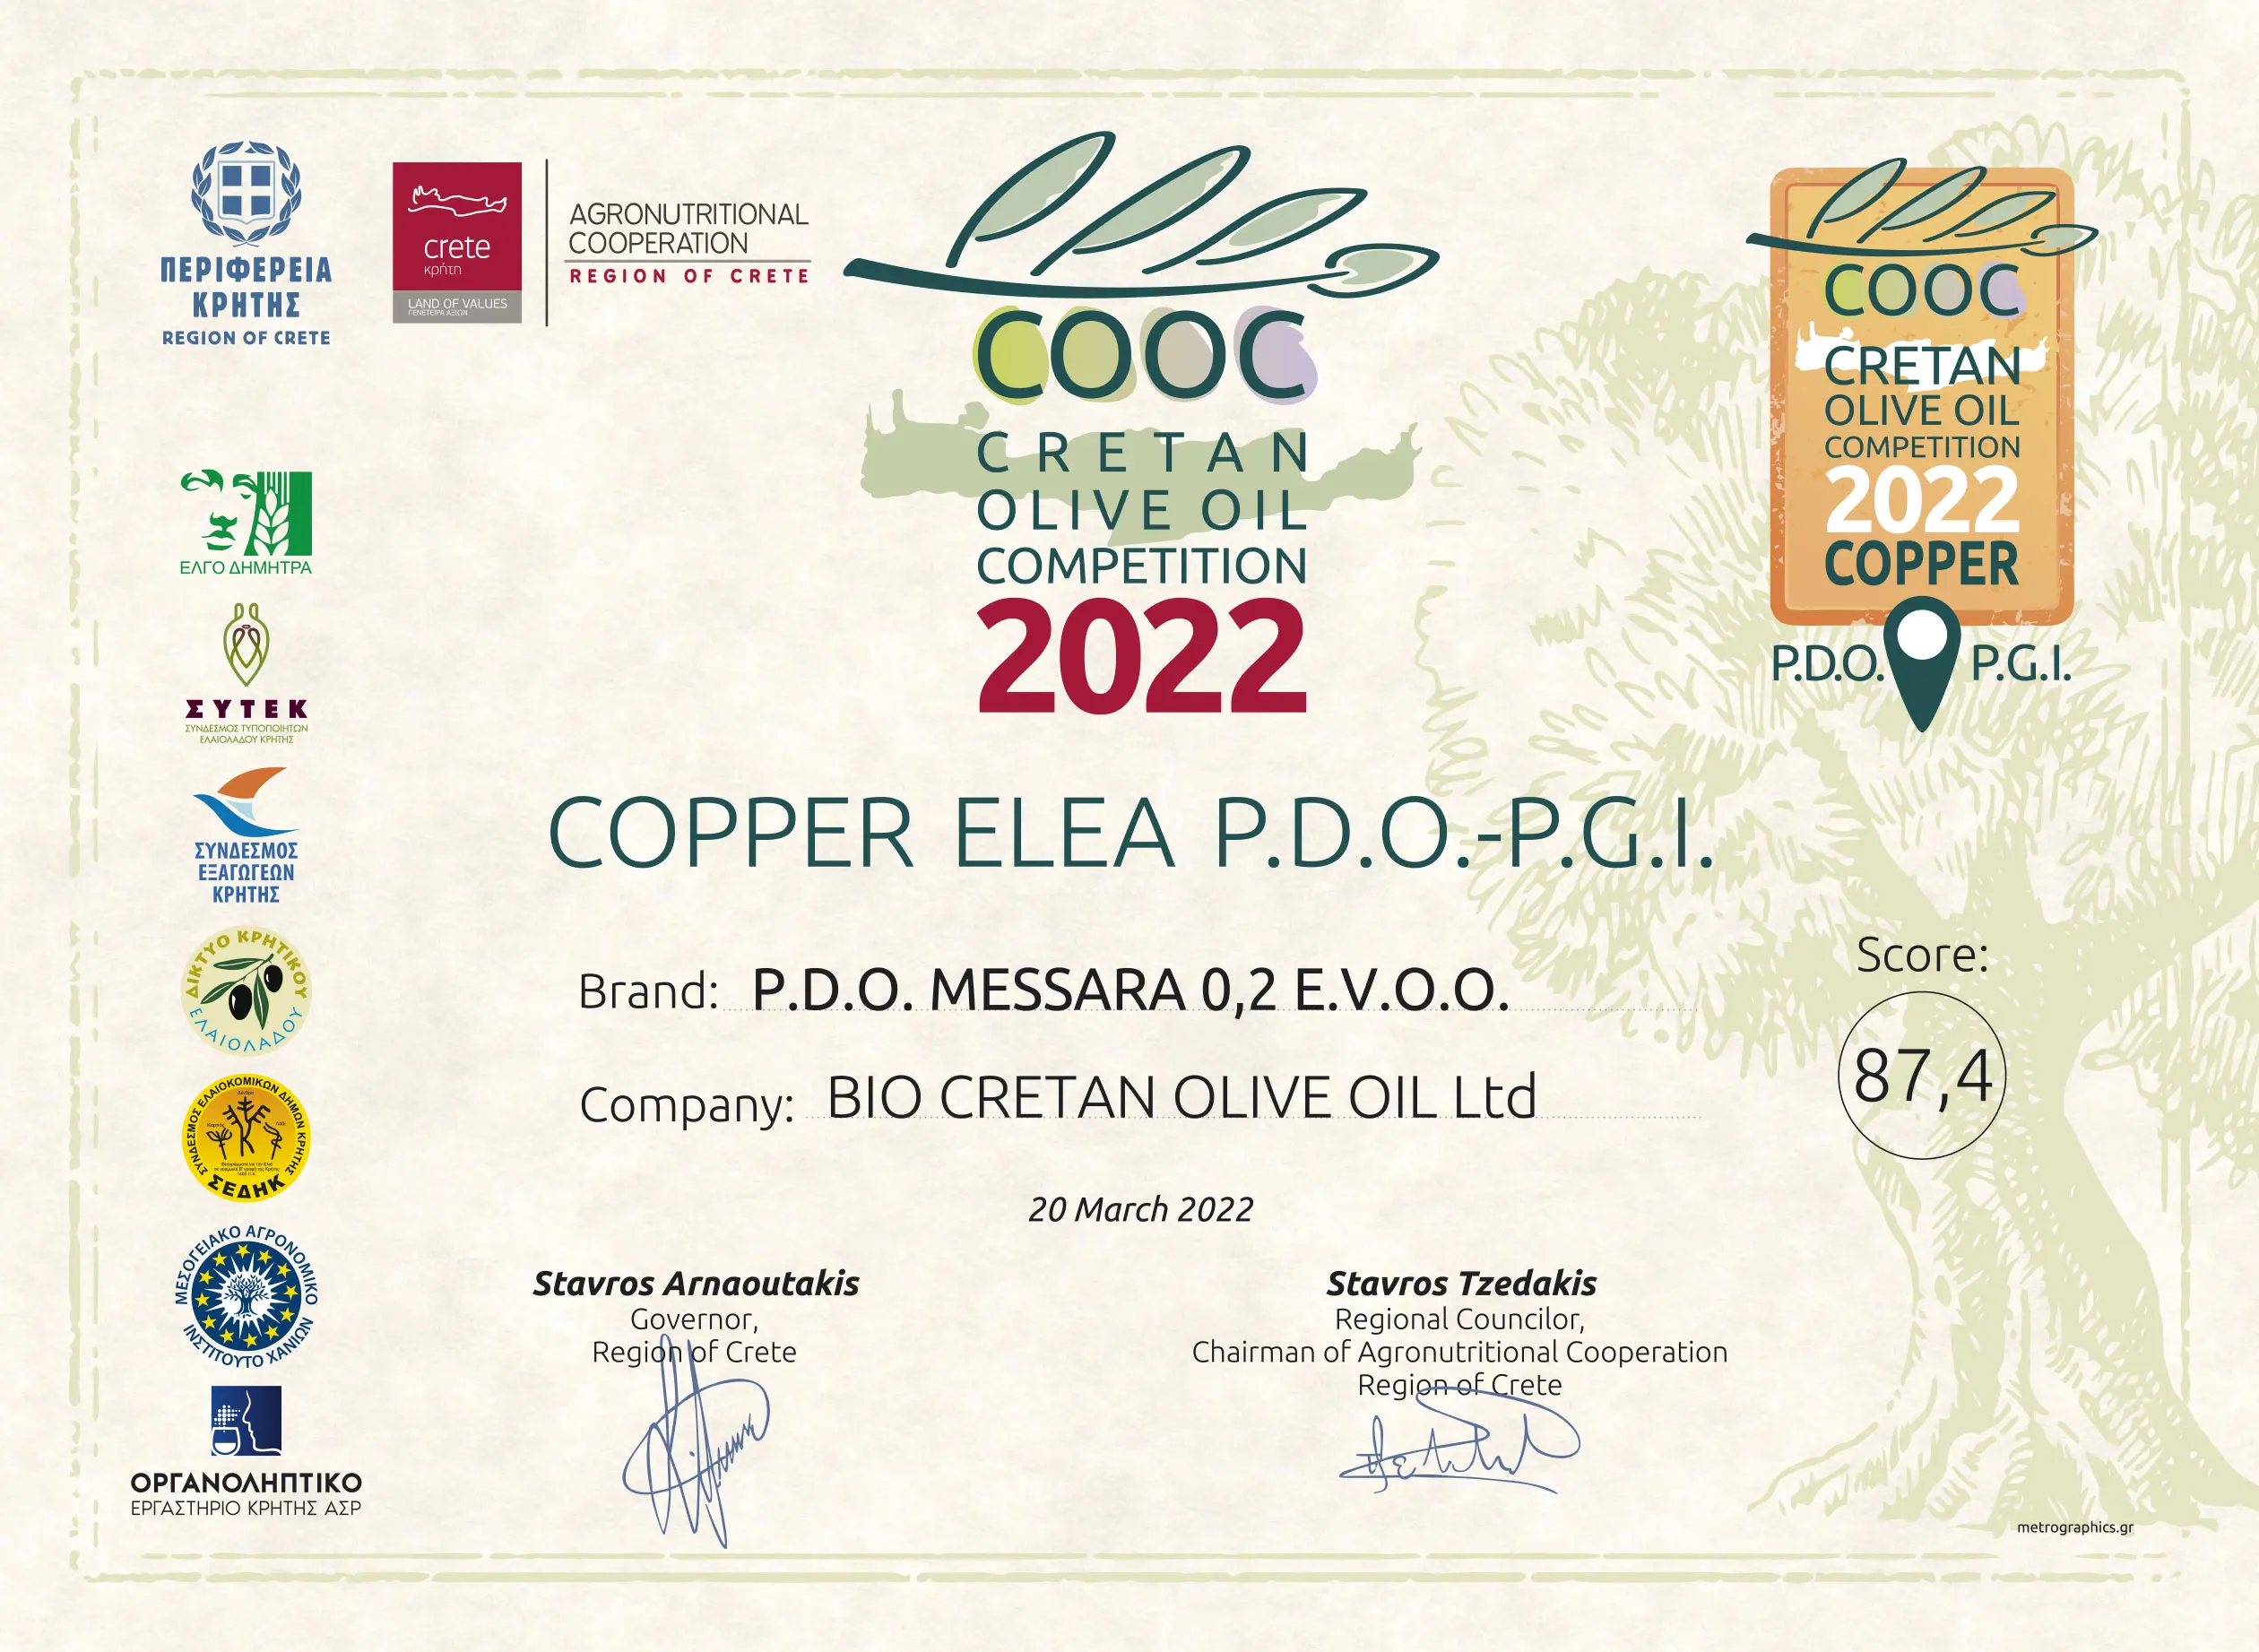 COOC - Конкурс критского оливкового масла